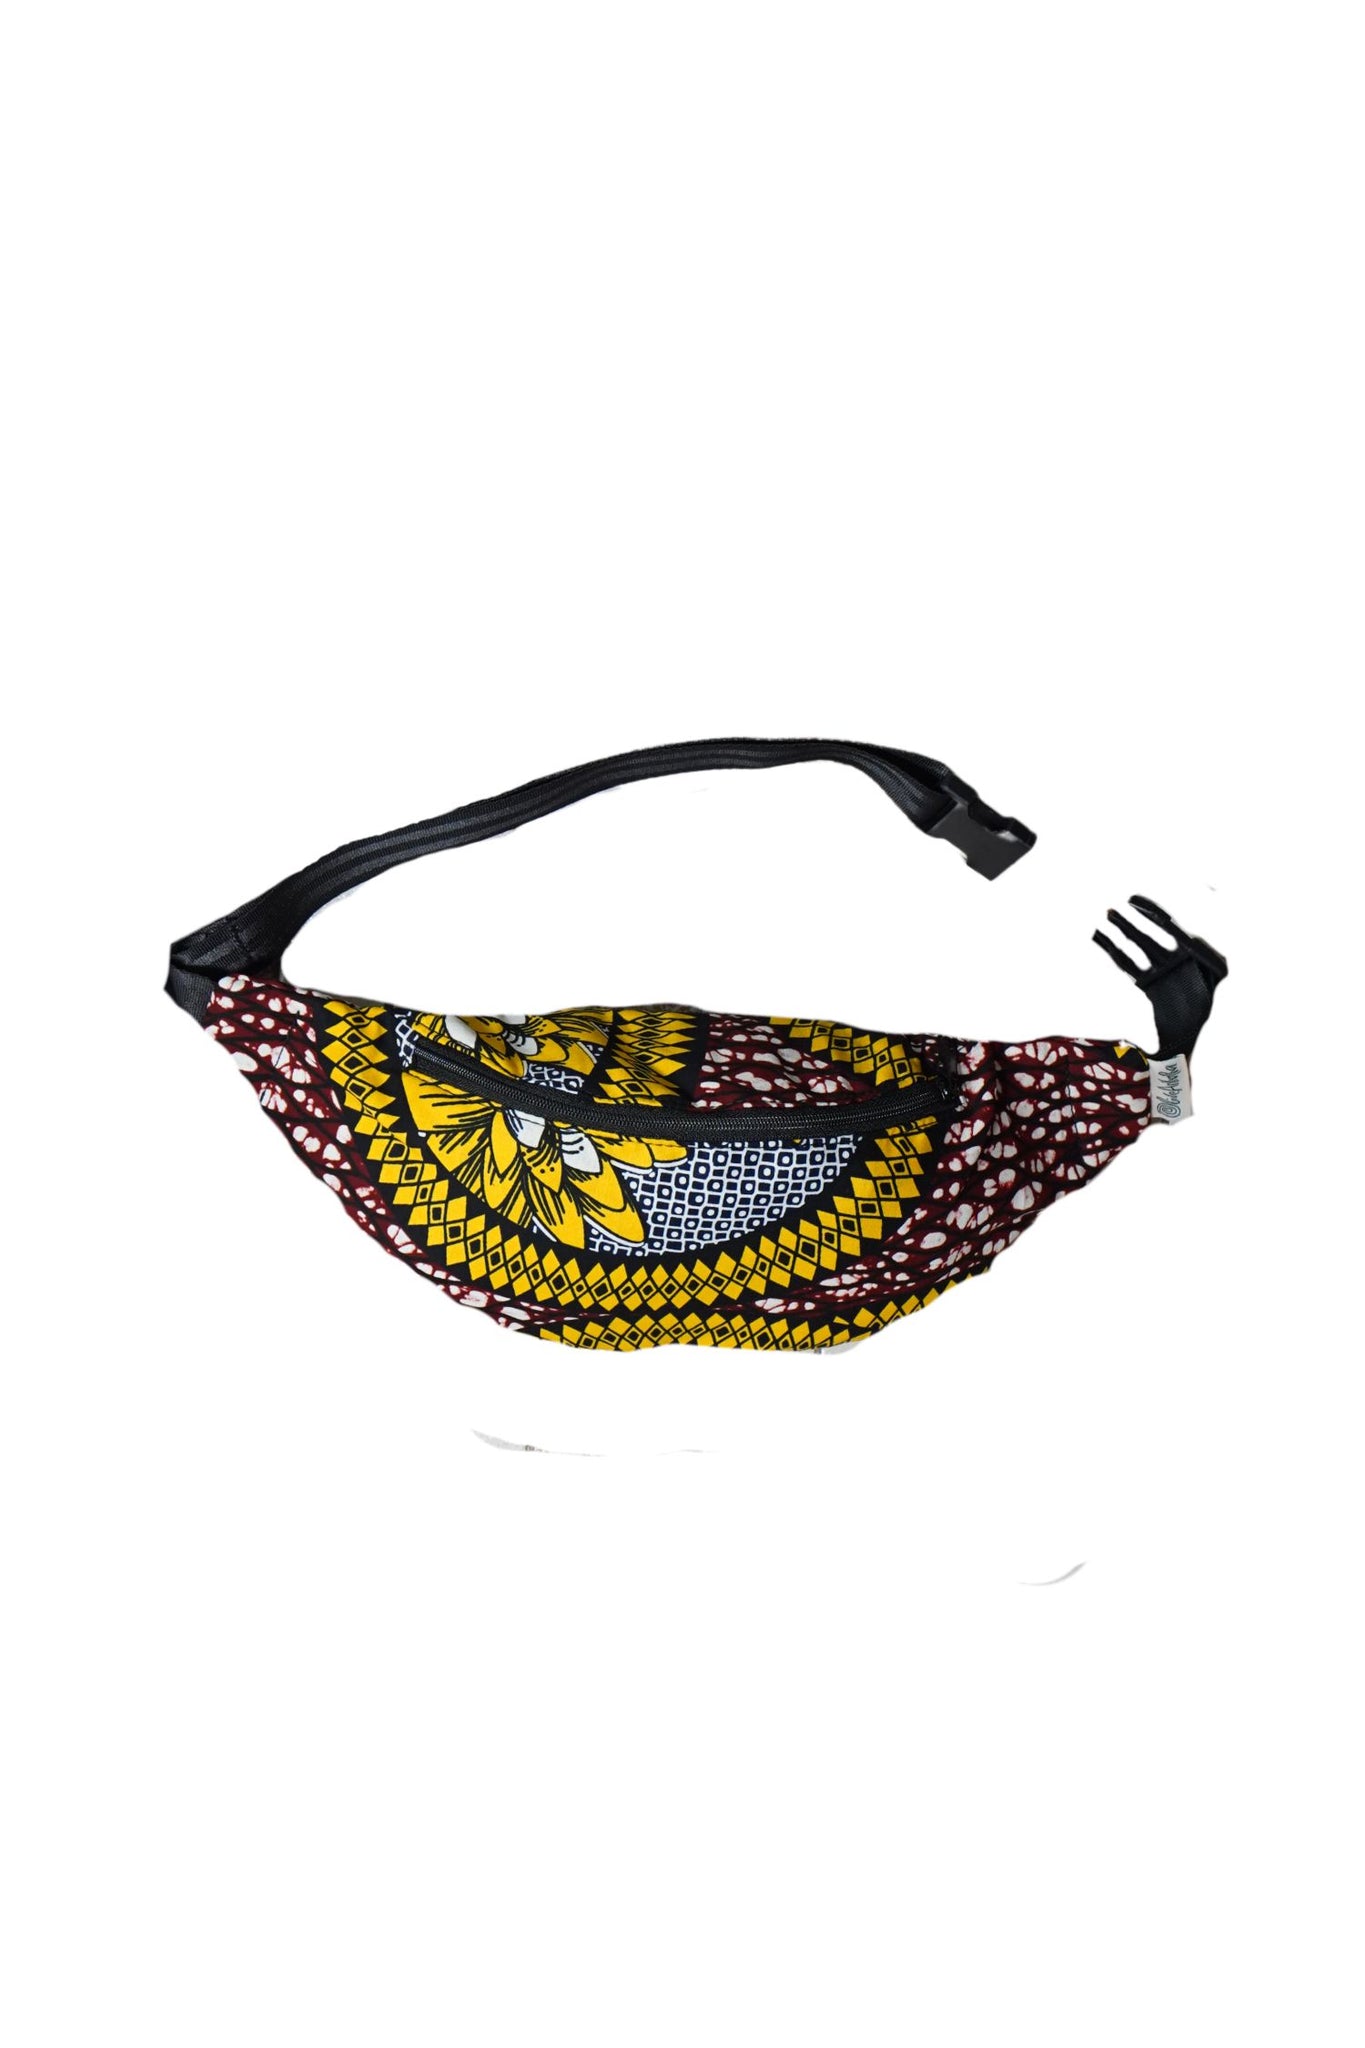 Seye Waistbag -  Burgundy Yellow and Black African Ankara Wax Cotton Print - 14